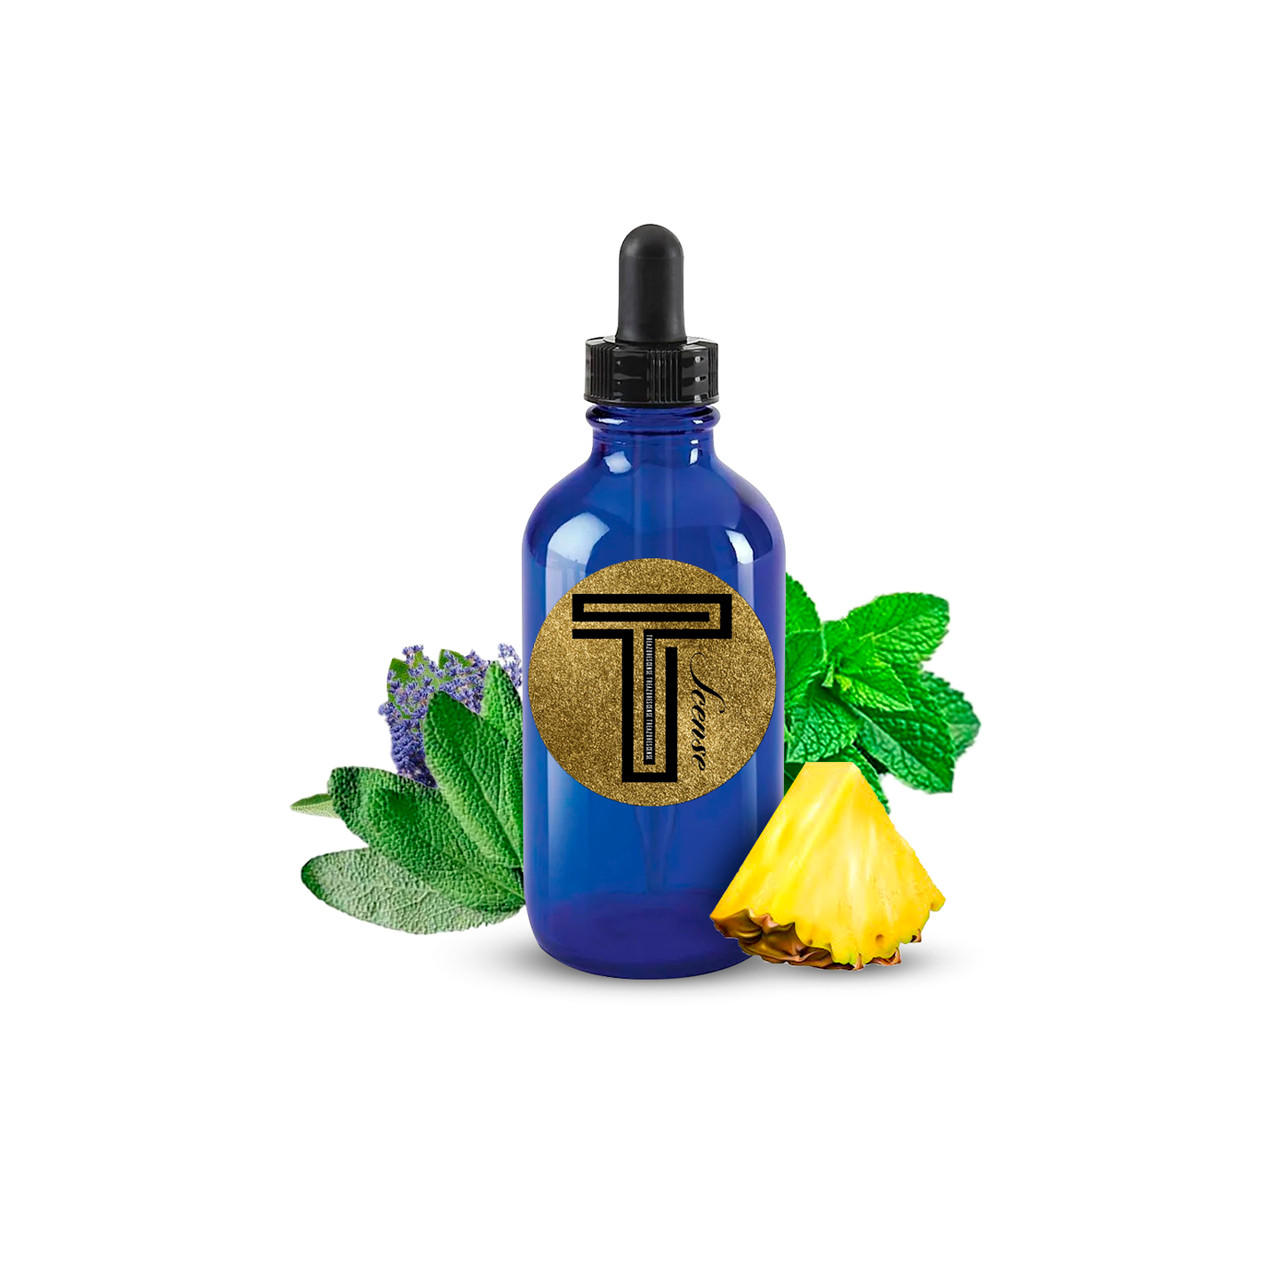 Pineapple Fusion Fragrance Oil